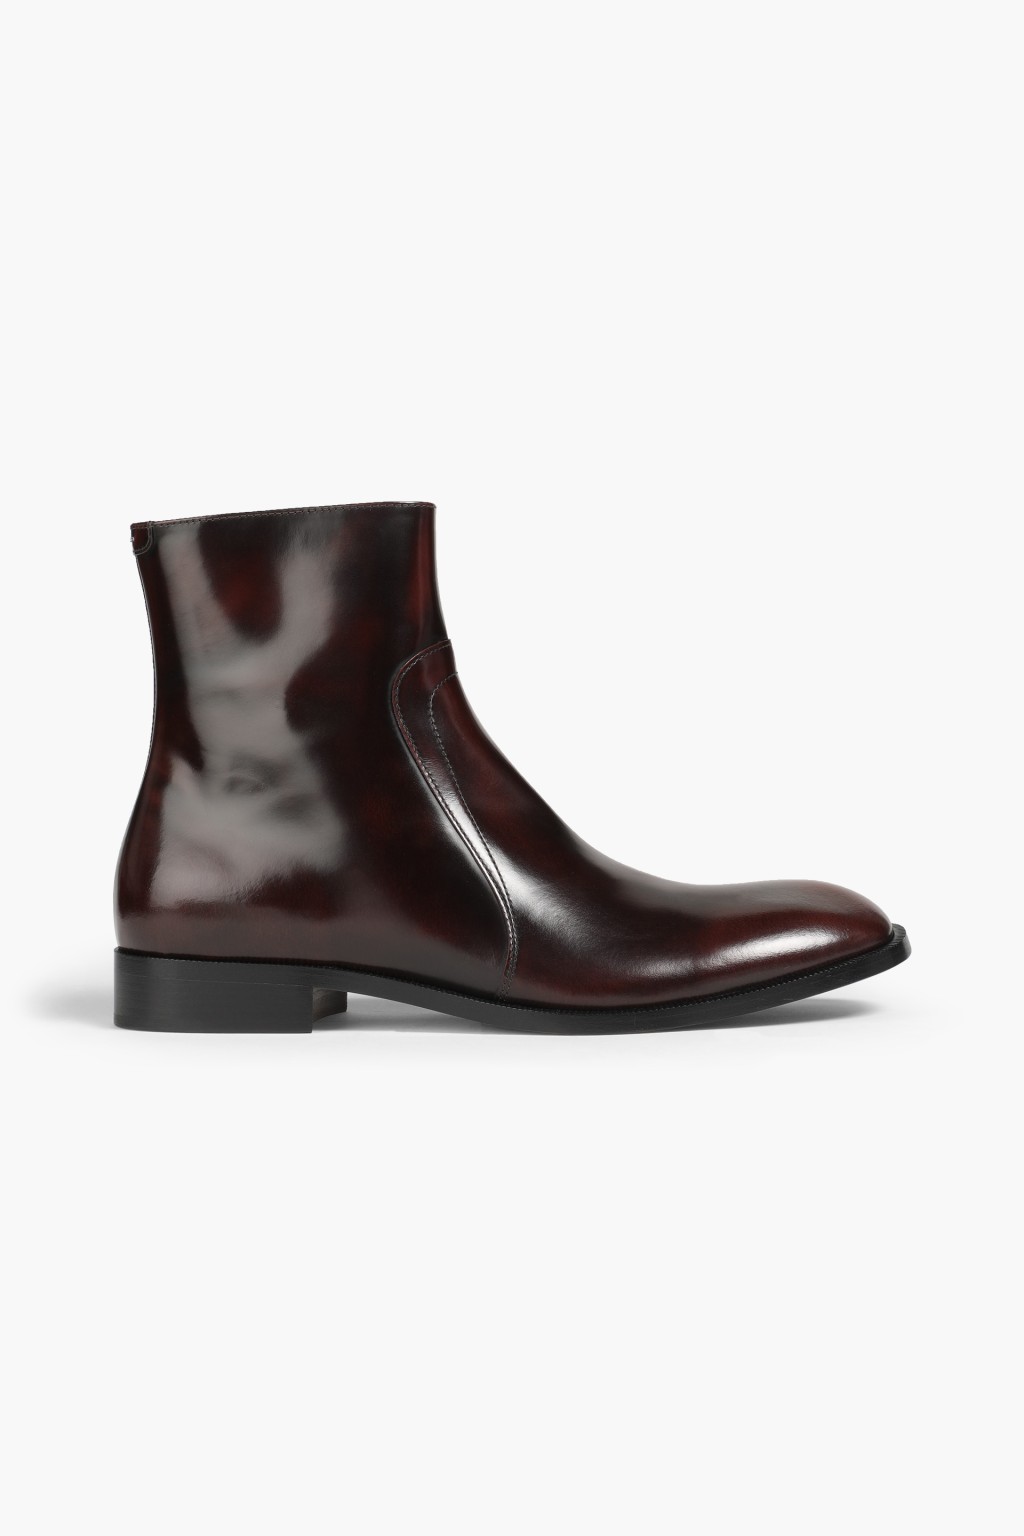 Maison Margiela黑色男装短靴/原价$3,214、现售$2,410/The Outnet。